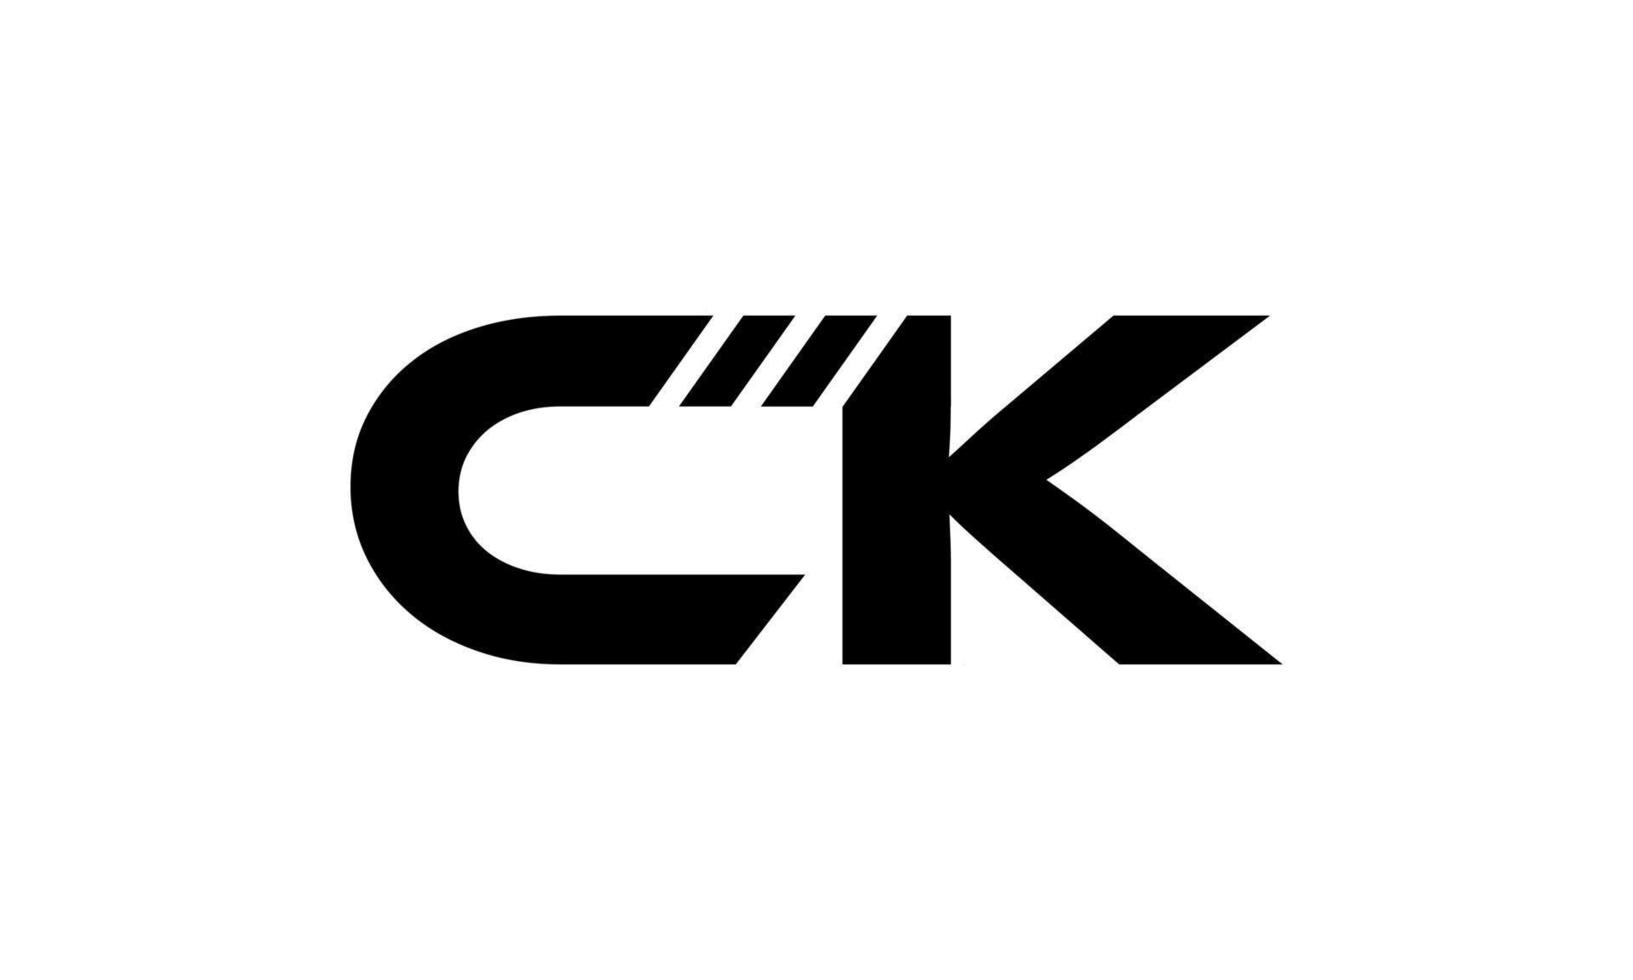 ck logo design. iniziale ck lettera logo design monogramma vettore design professionista vettore.